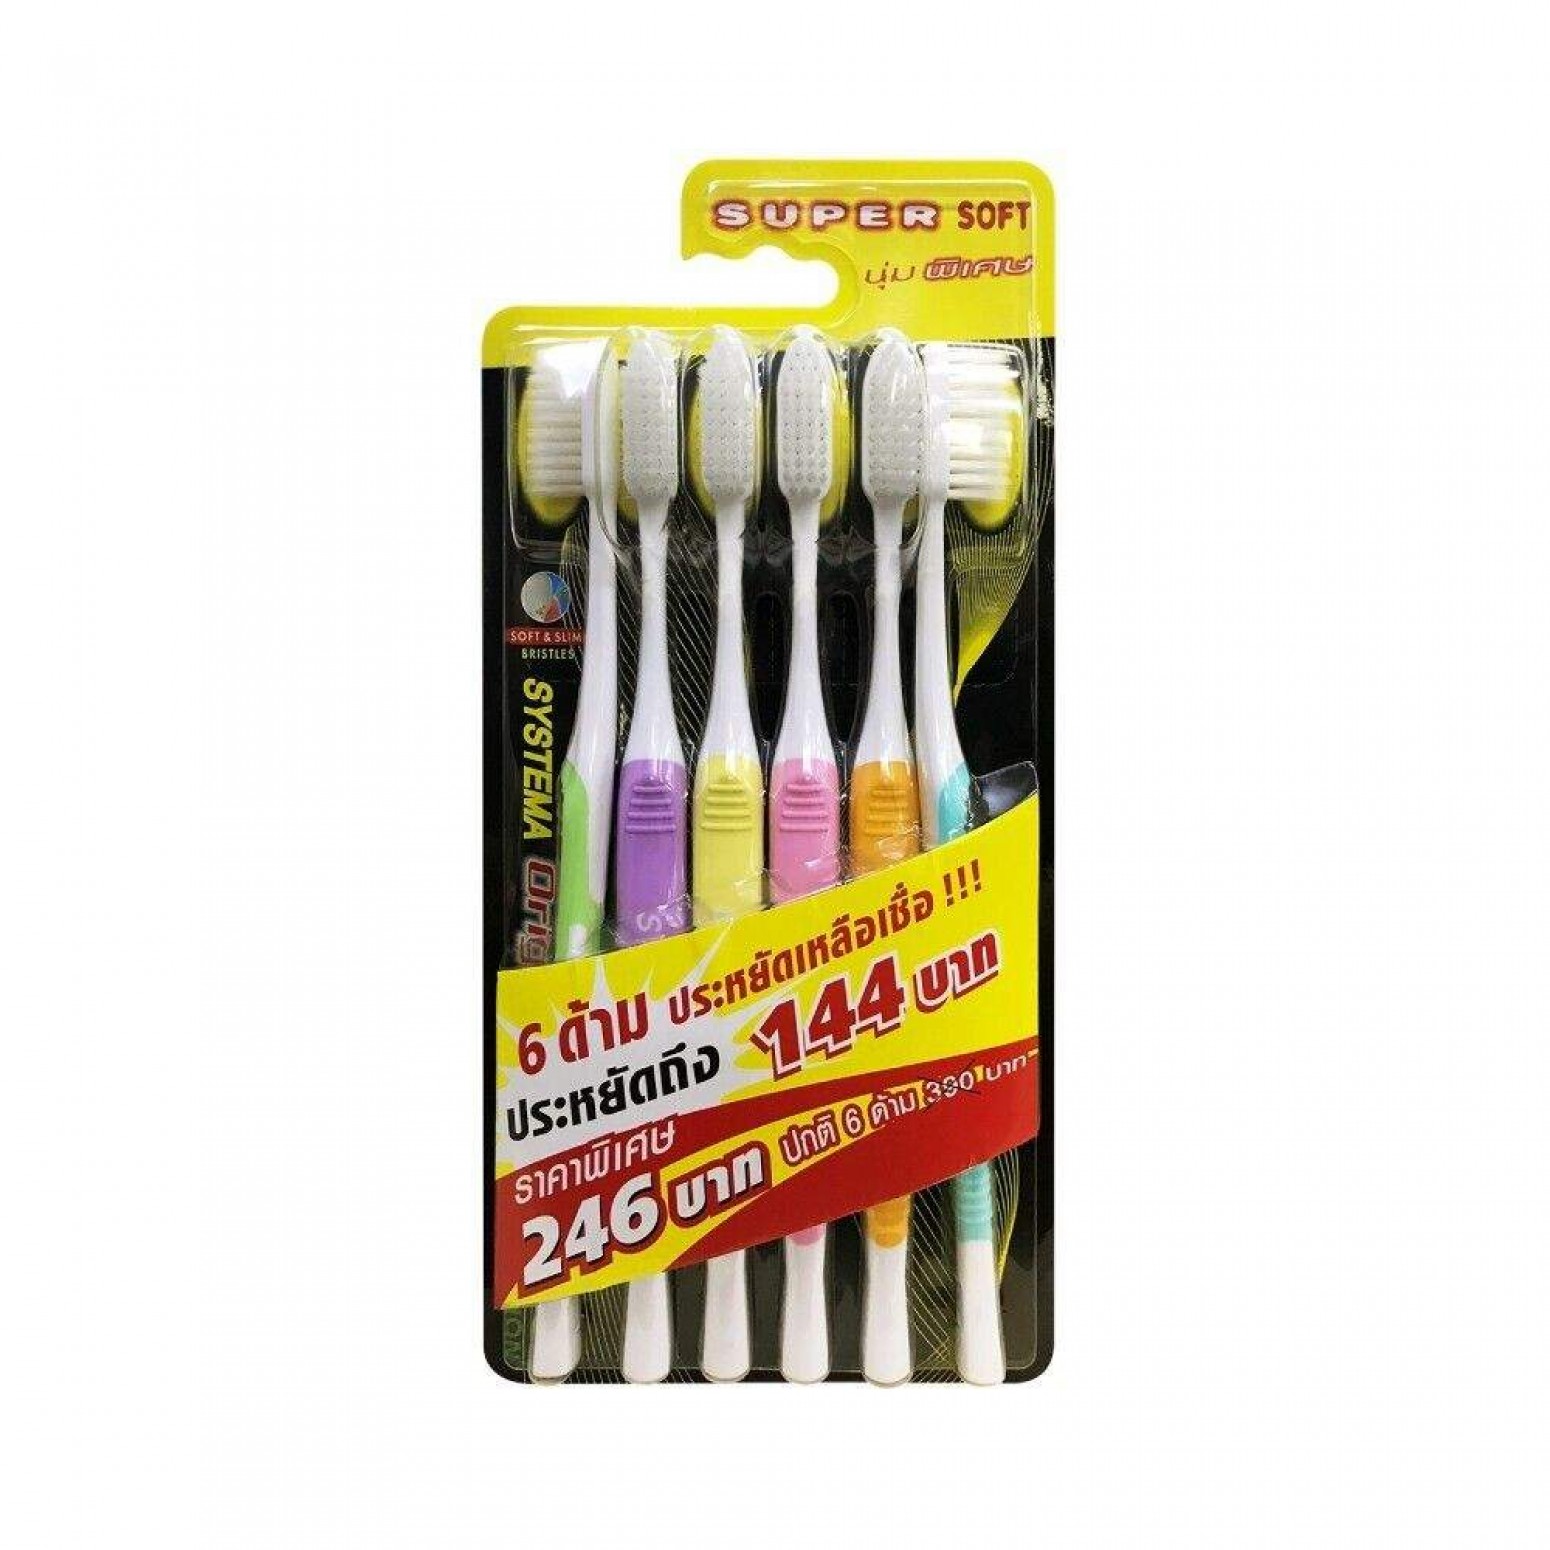 Systema Original Super Soft Toothbrush Pack 6pcs